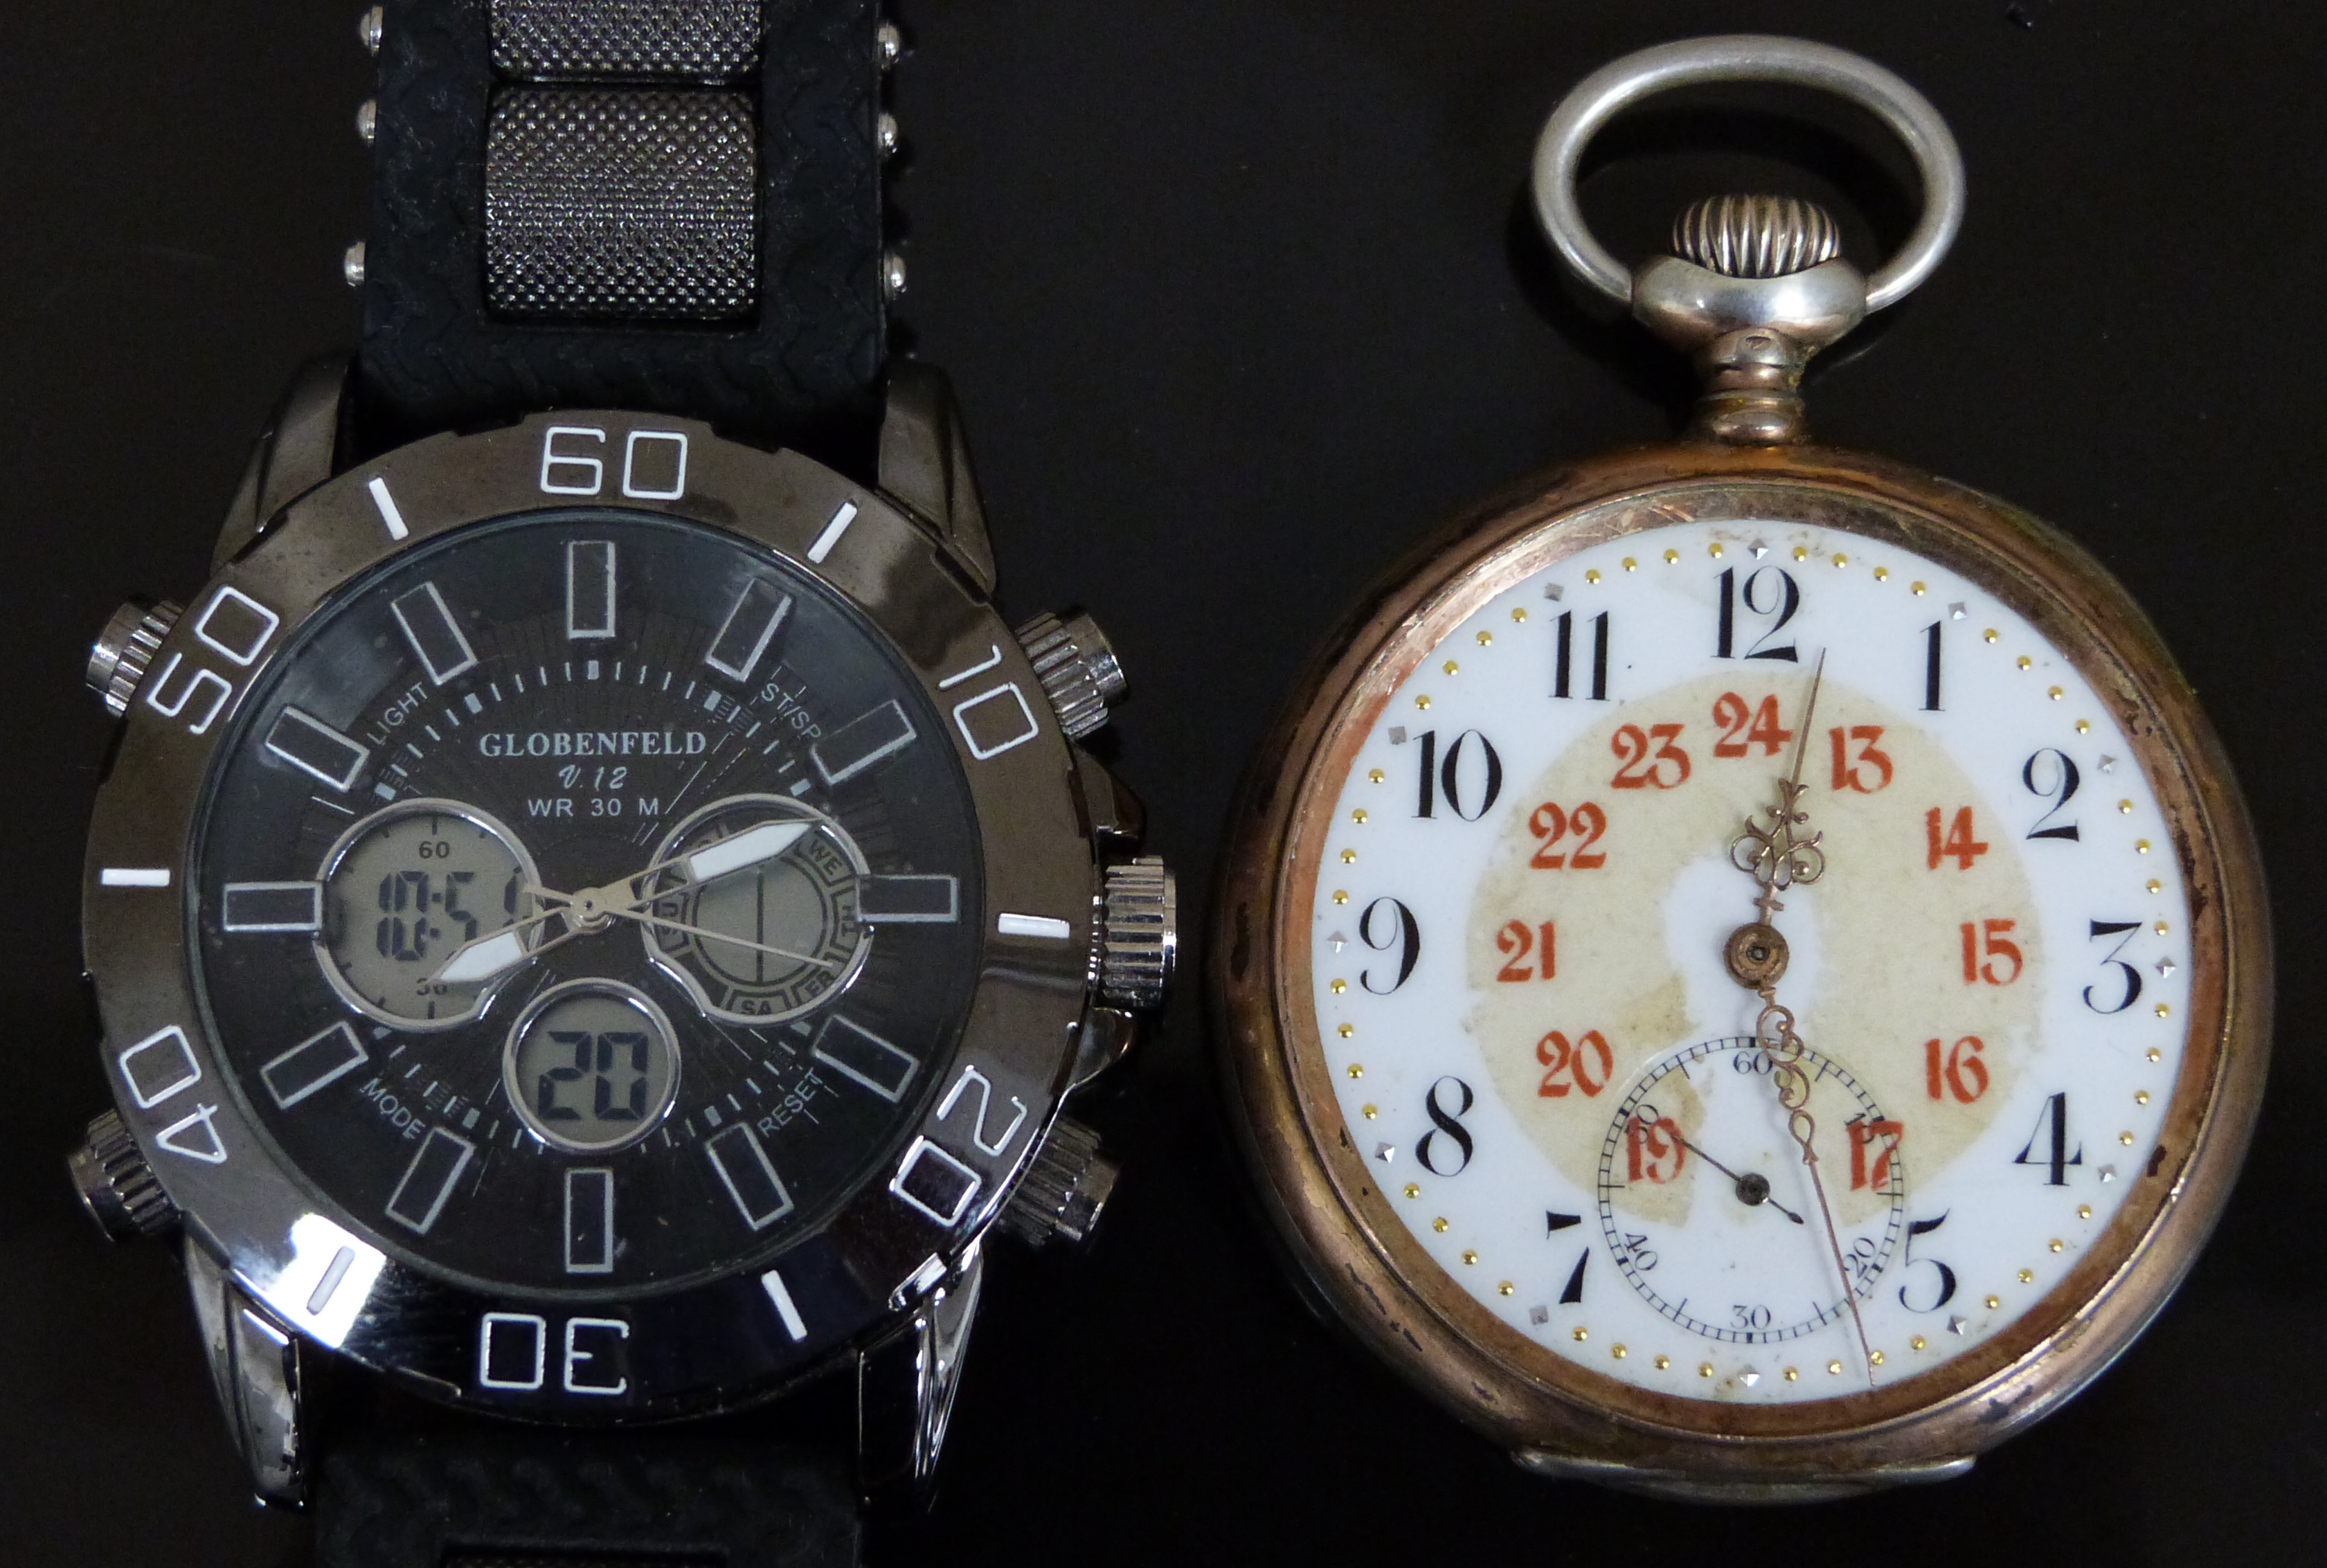 Globenfeld V12 wristwatch with black dial and digital sub dials, case diameter 45mm, in original box